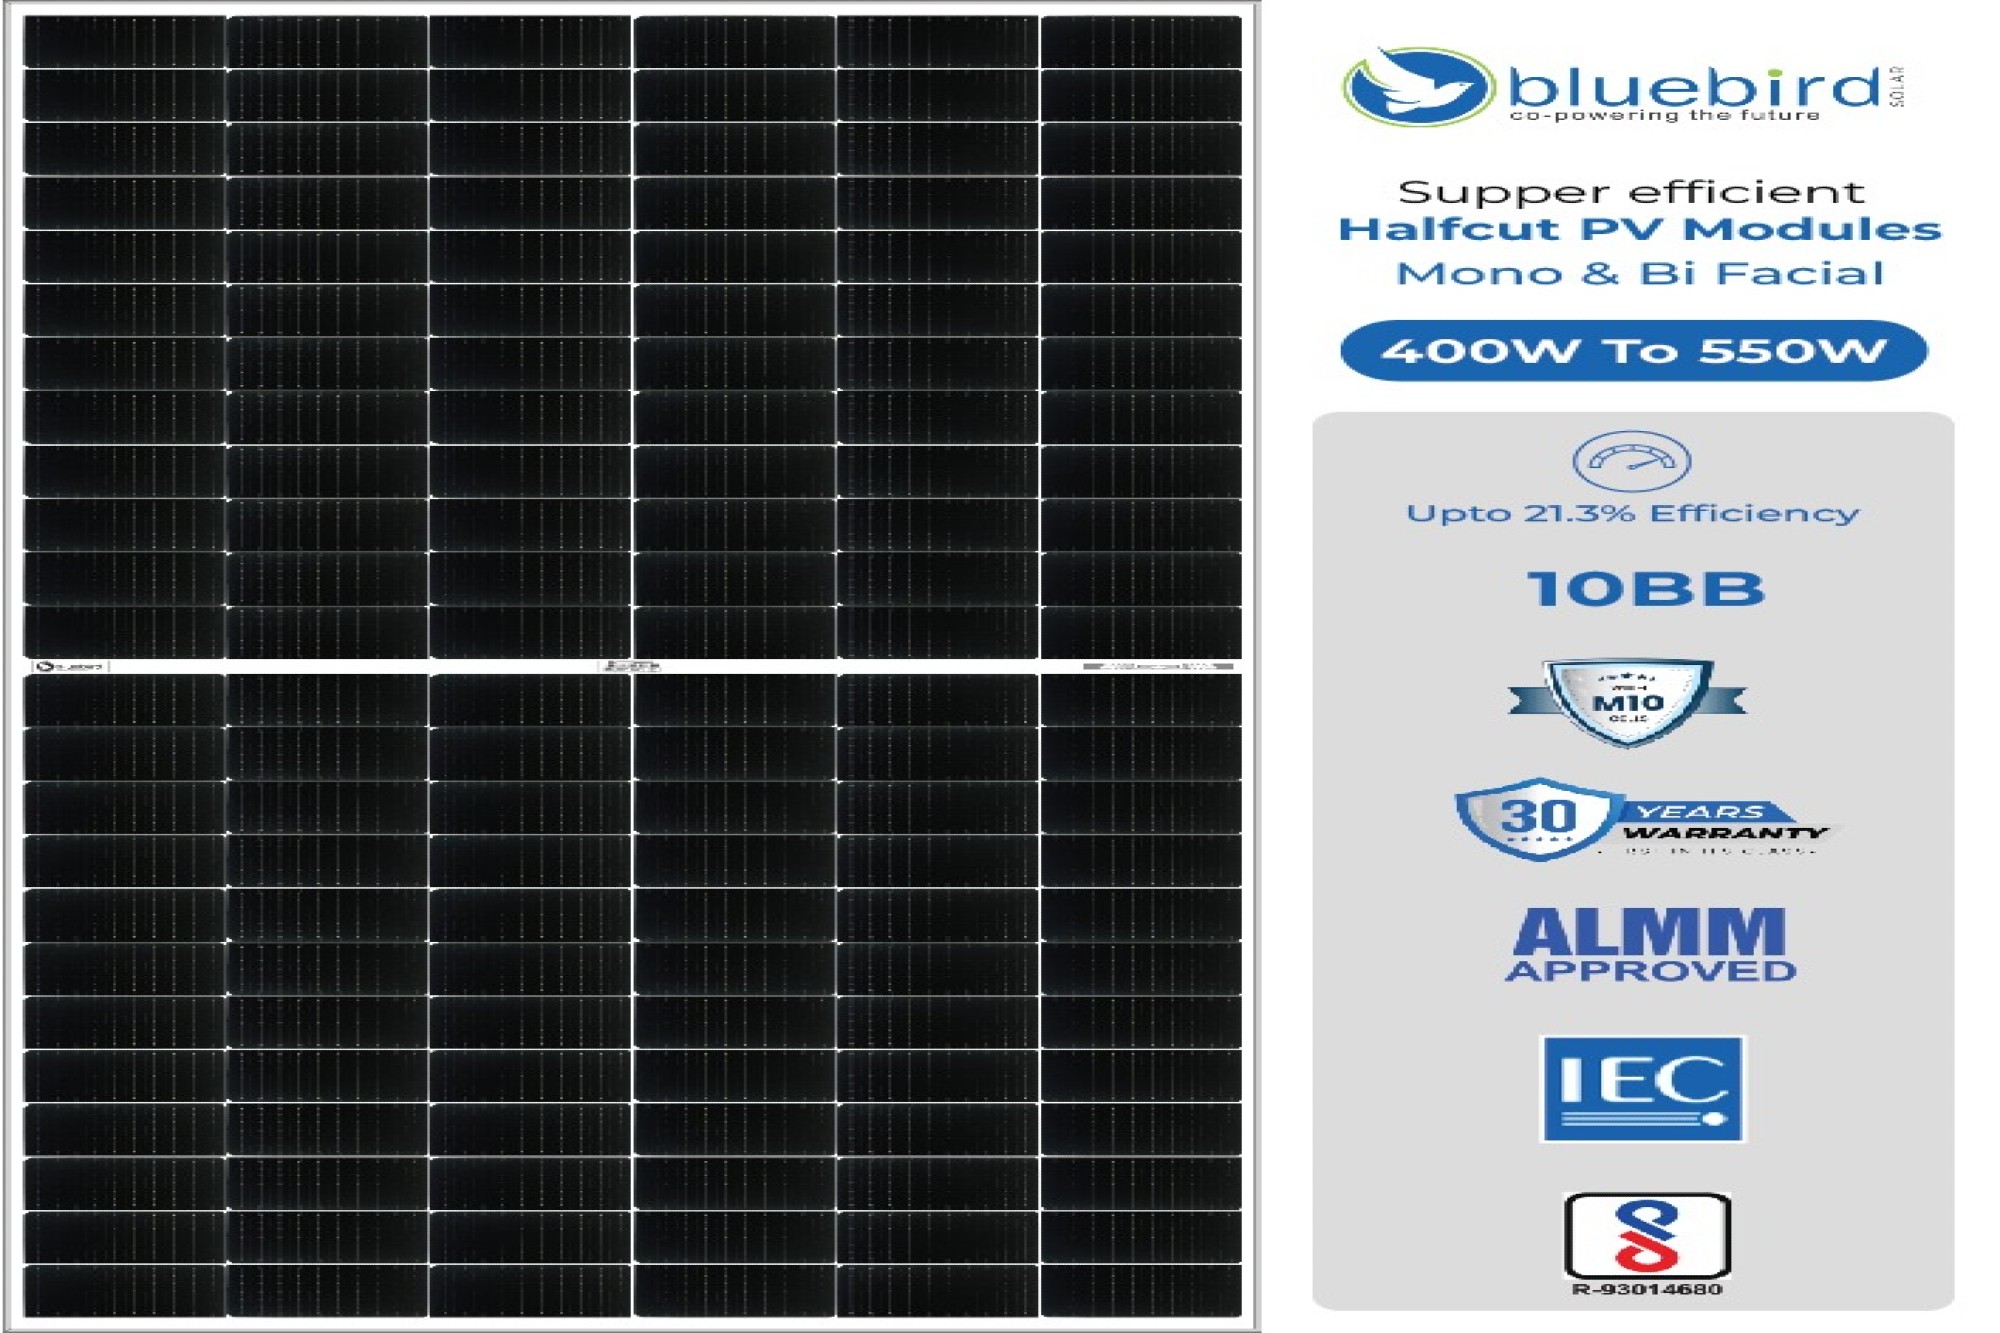 Bluebird Solar’s advanced M10 modules major attraction at Intersolar Gujarat